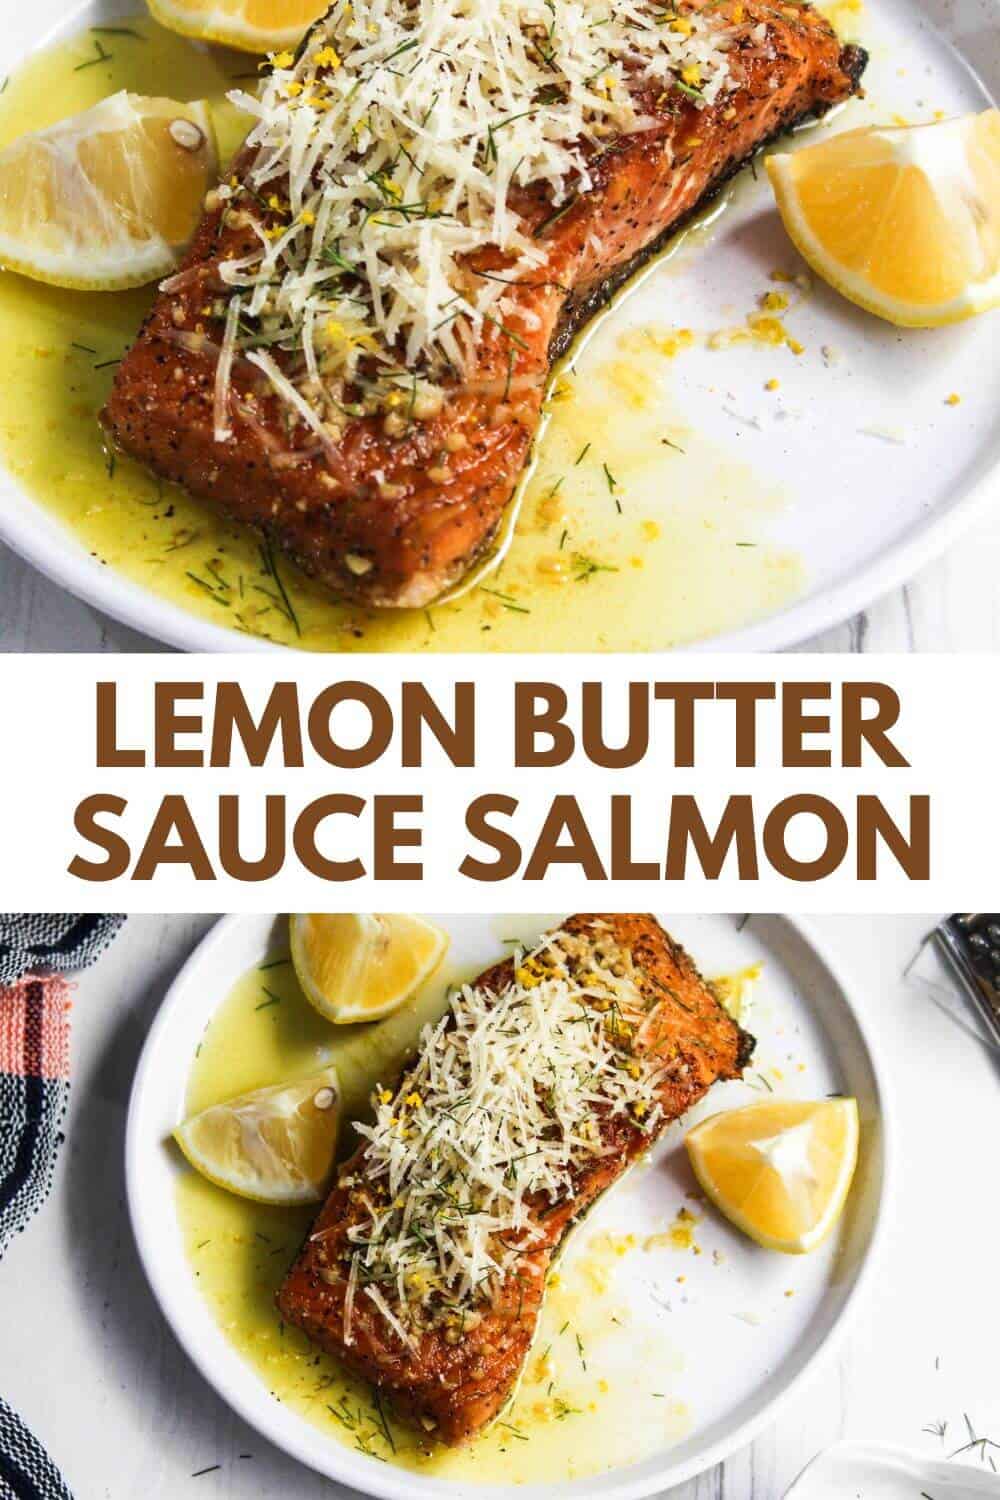 Lemon butter sauce salmon on a plate.